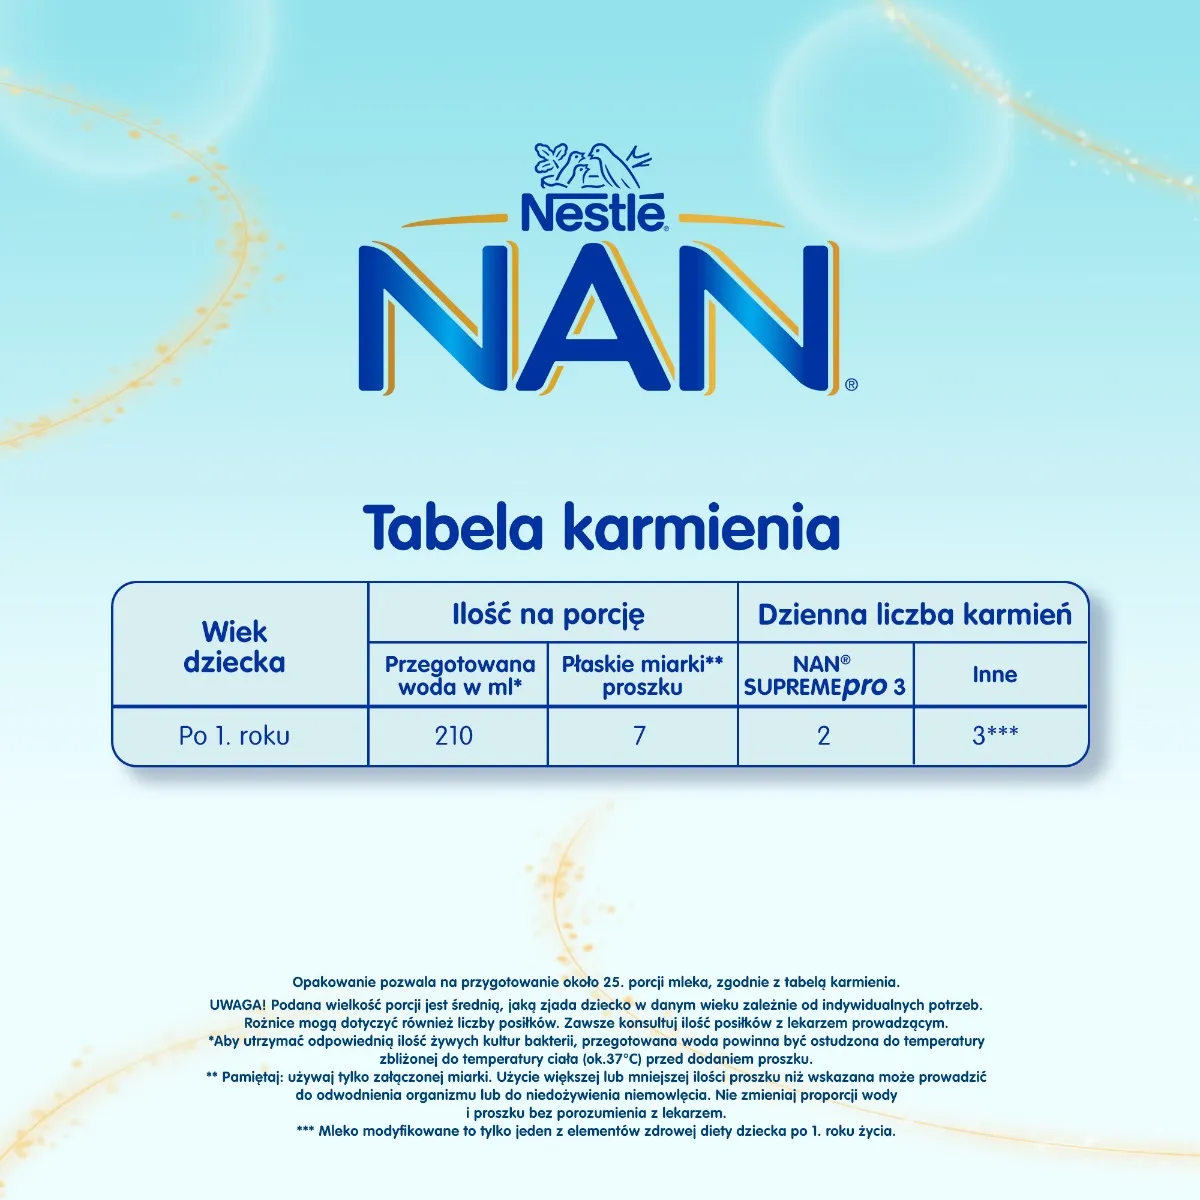 Nestle Nan Supreme Pro 3 HM-O Mleko Modyfikowane Junior Dla dzieci po 1. roku, 800g 